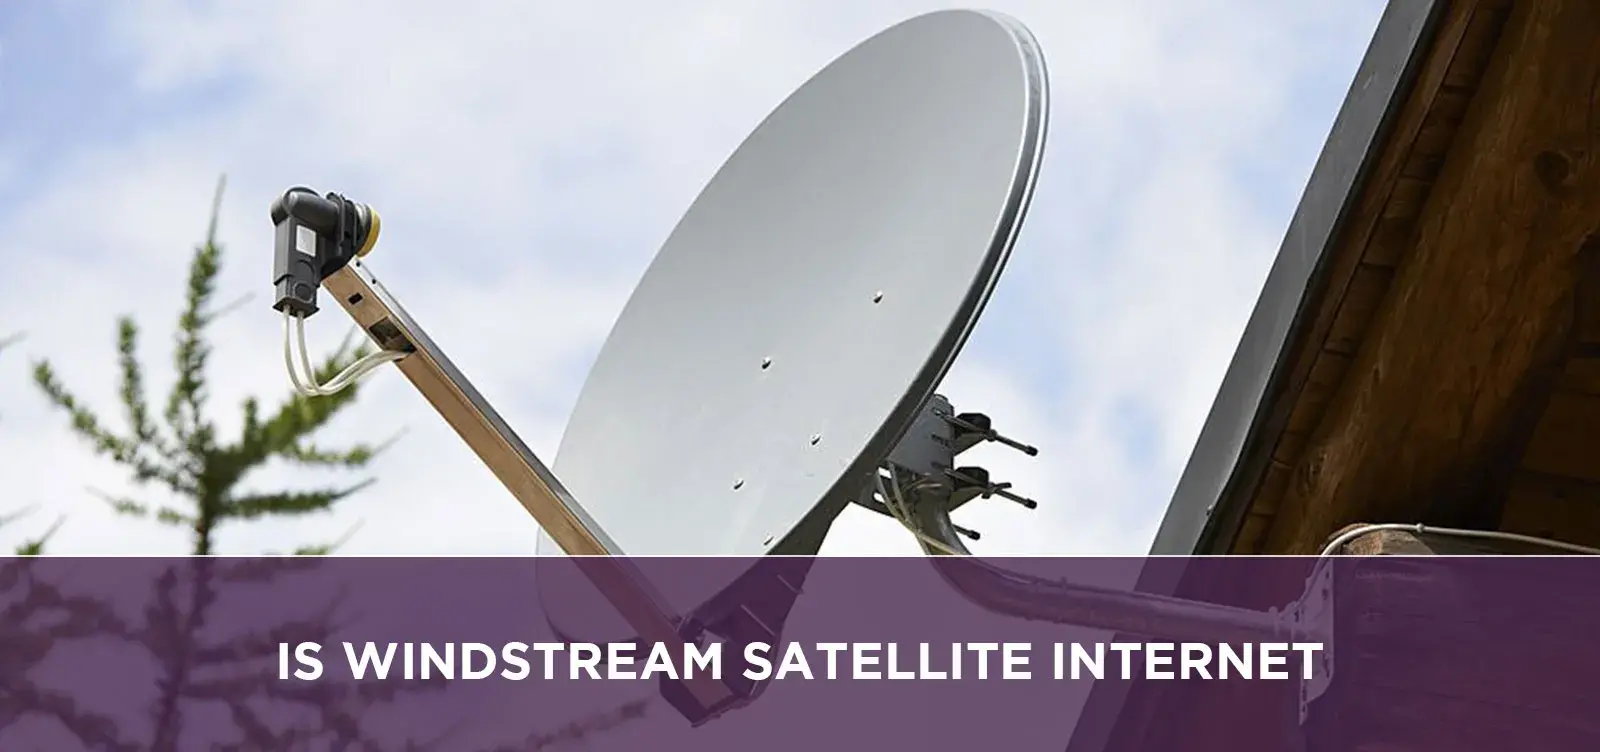 Is Windstream Satellite Internet?